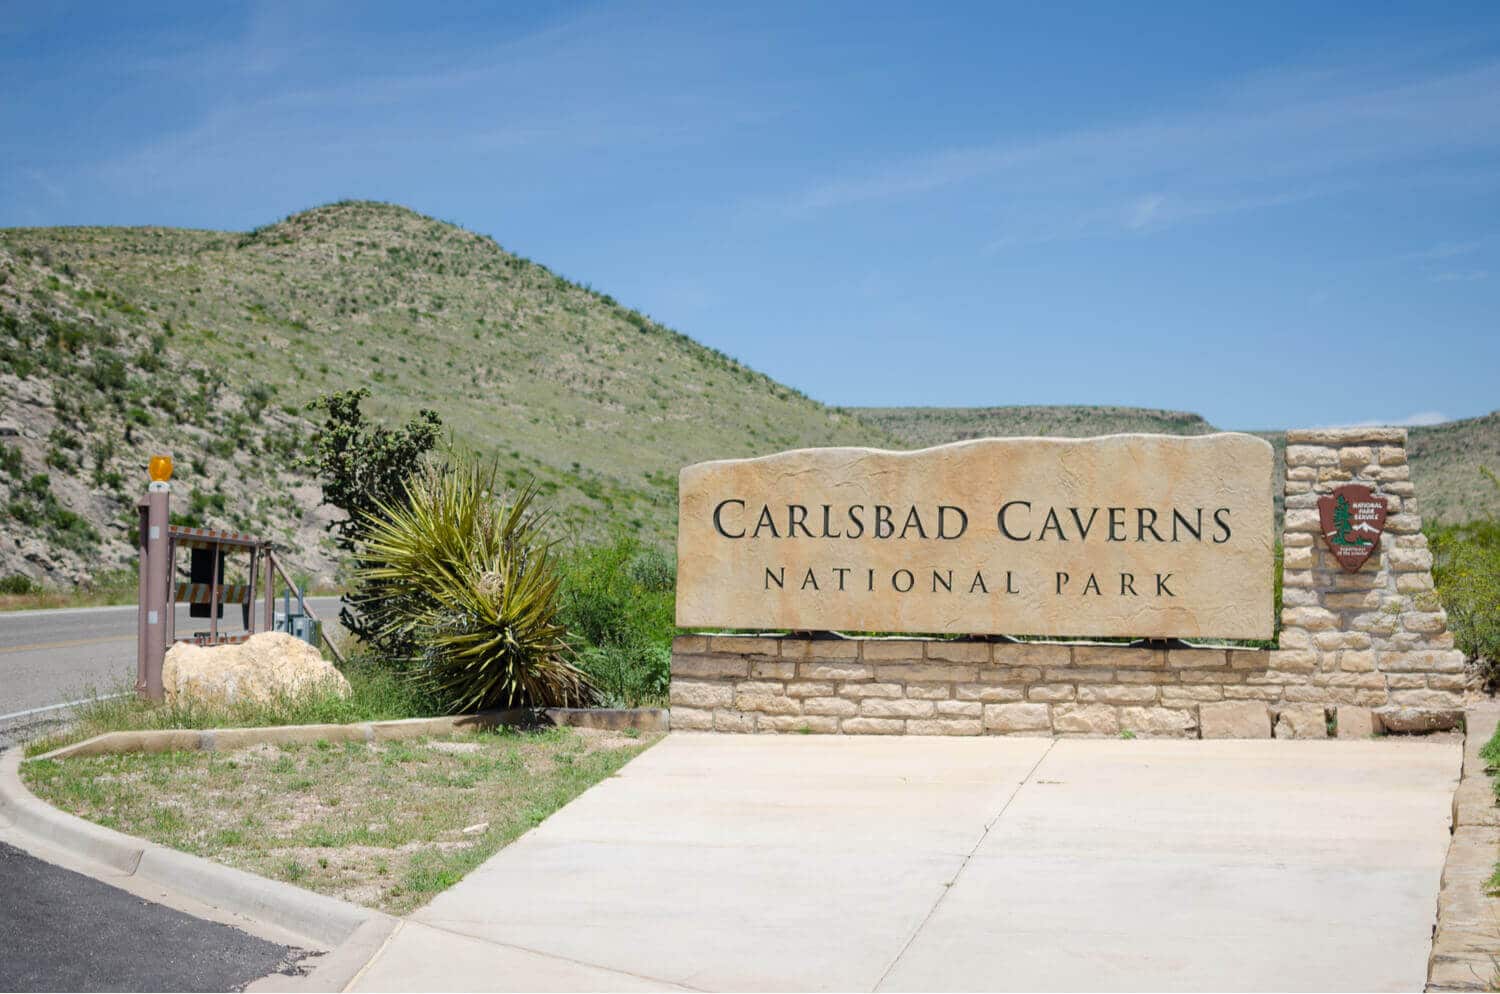 Sign proclaiming Carlsbad Caverns